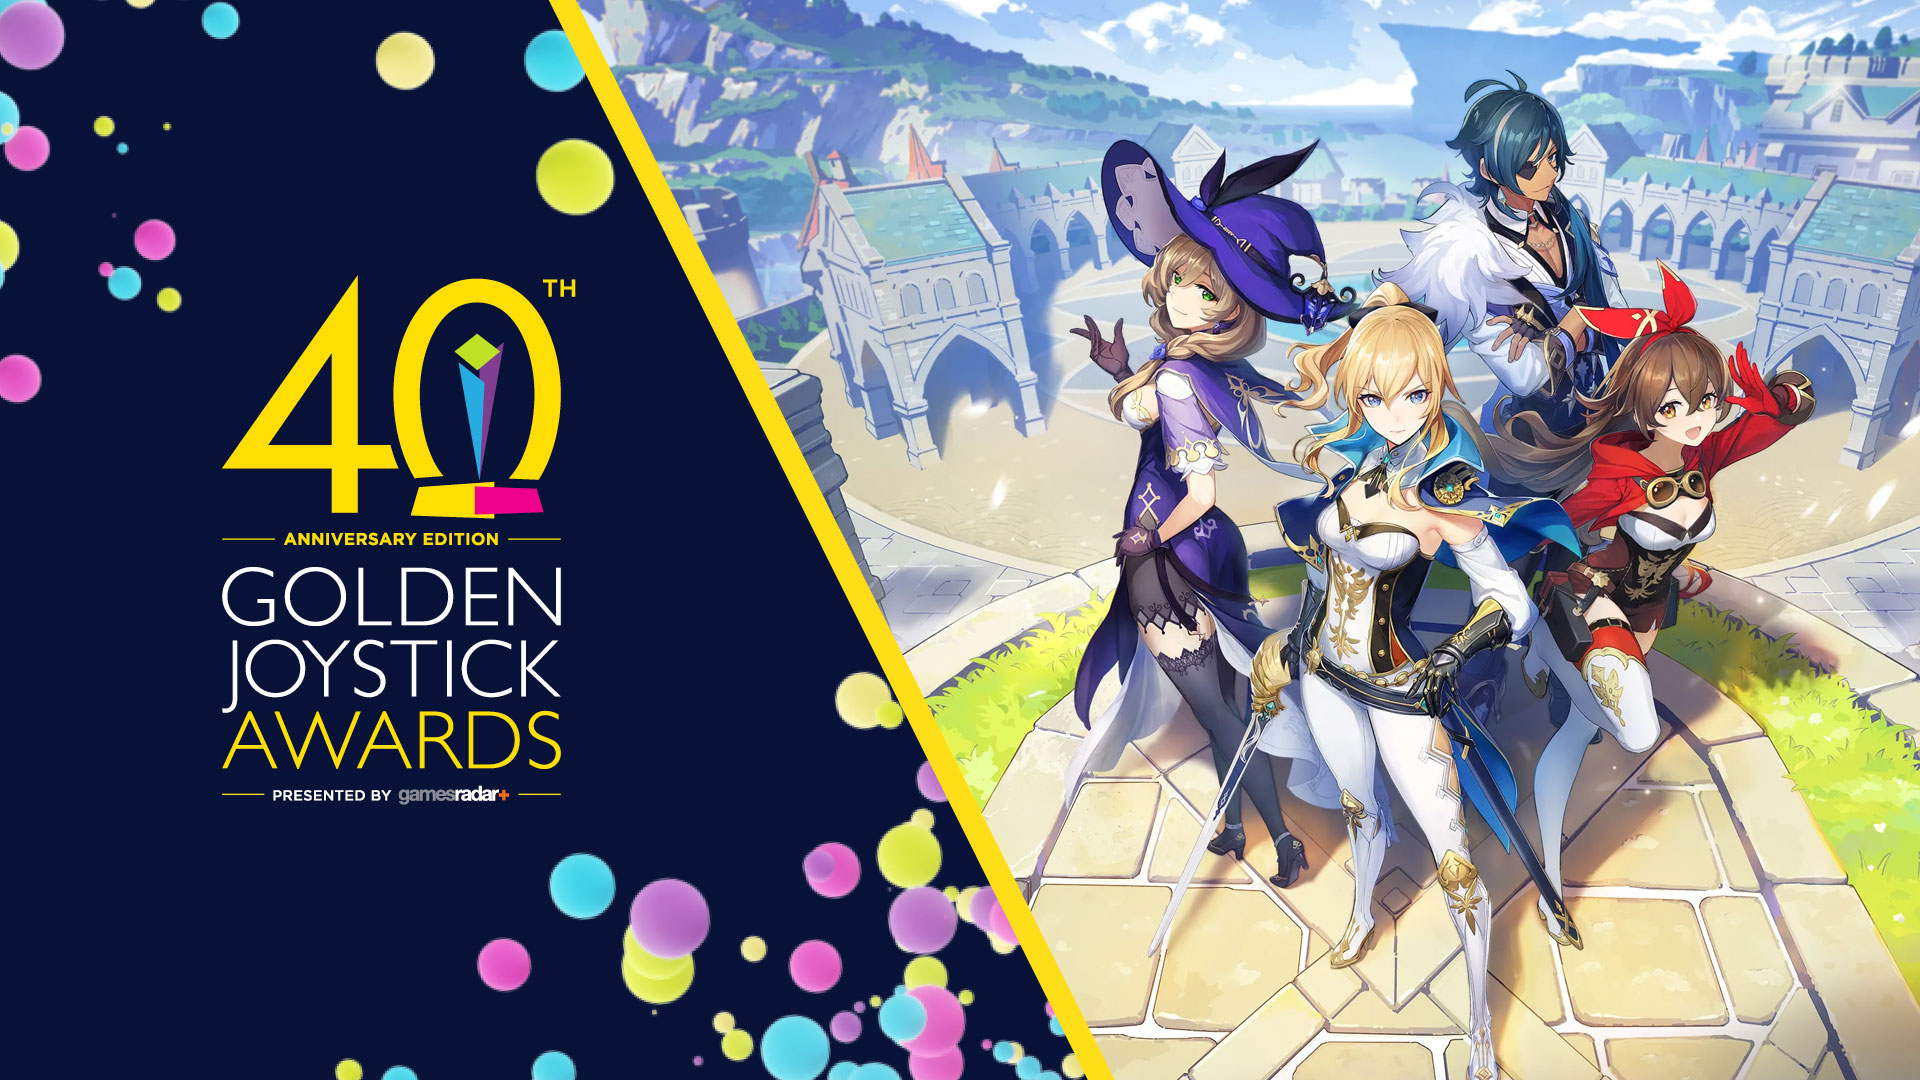 Genshin Impact has won the Golden Joystick Awards 2022!